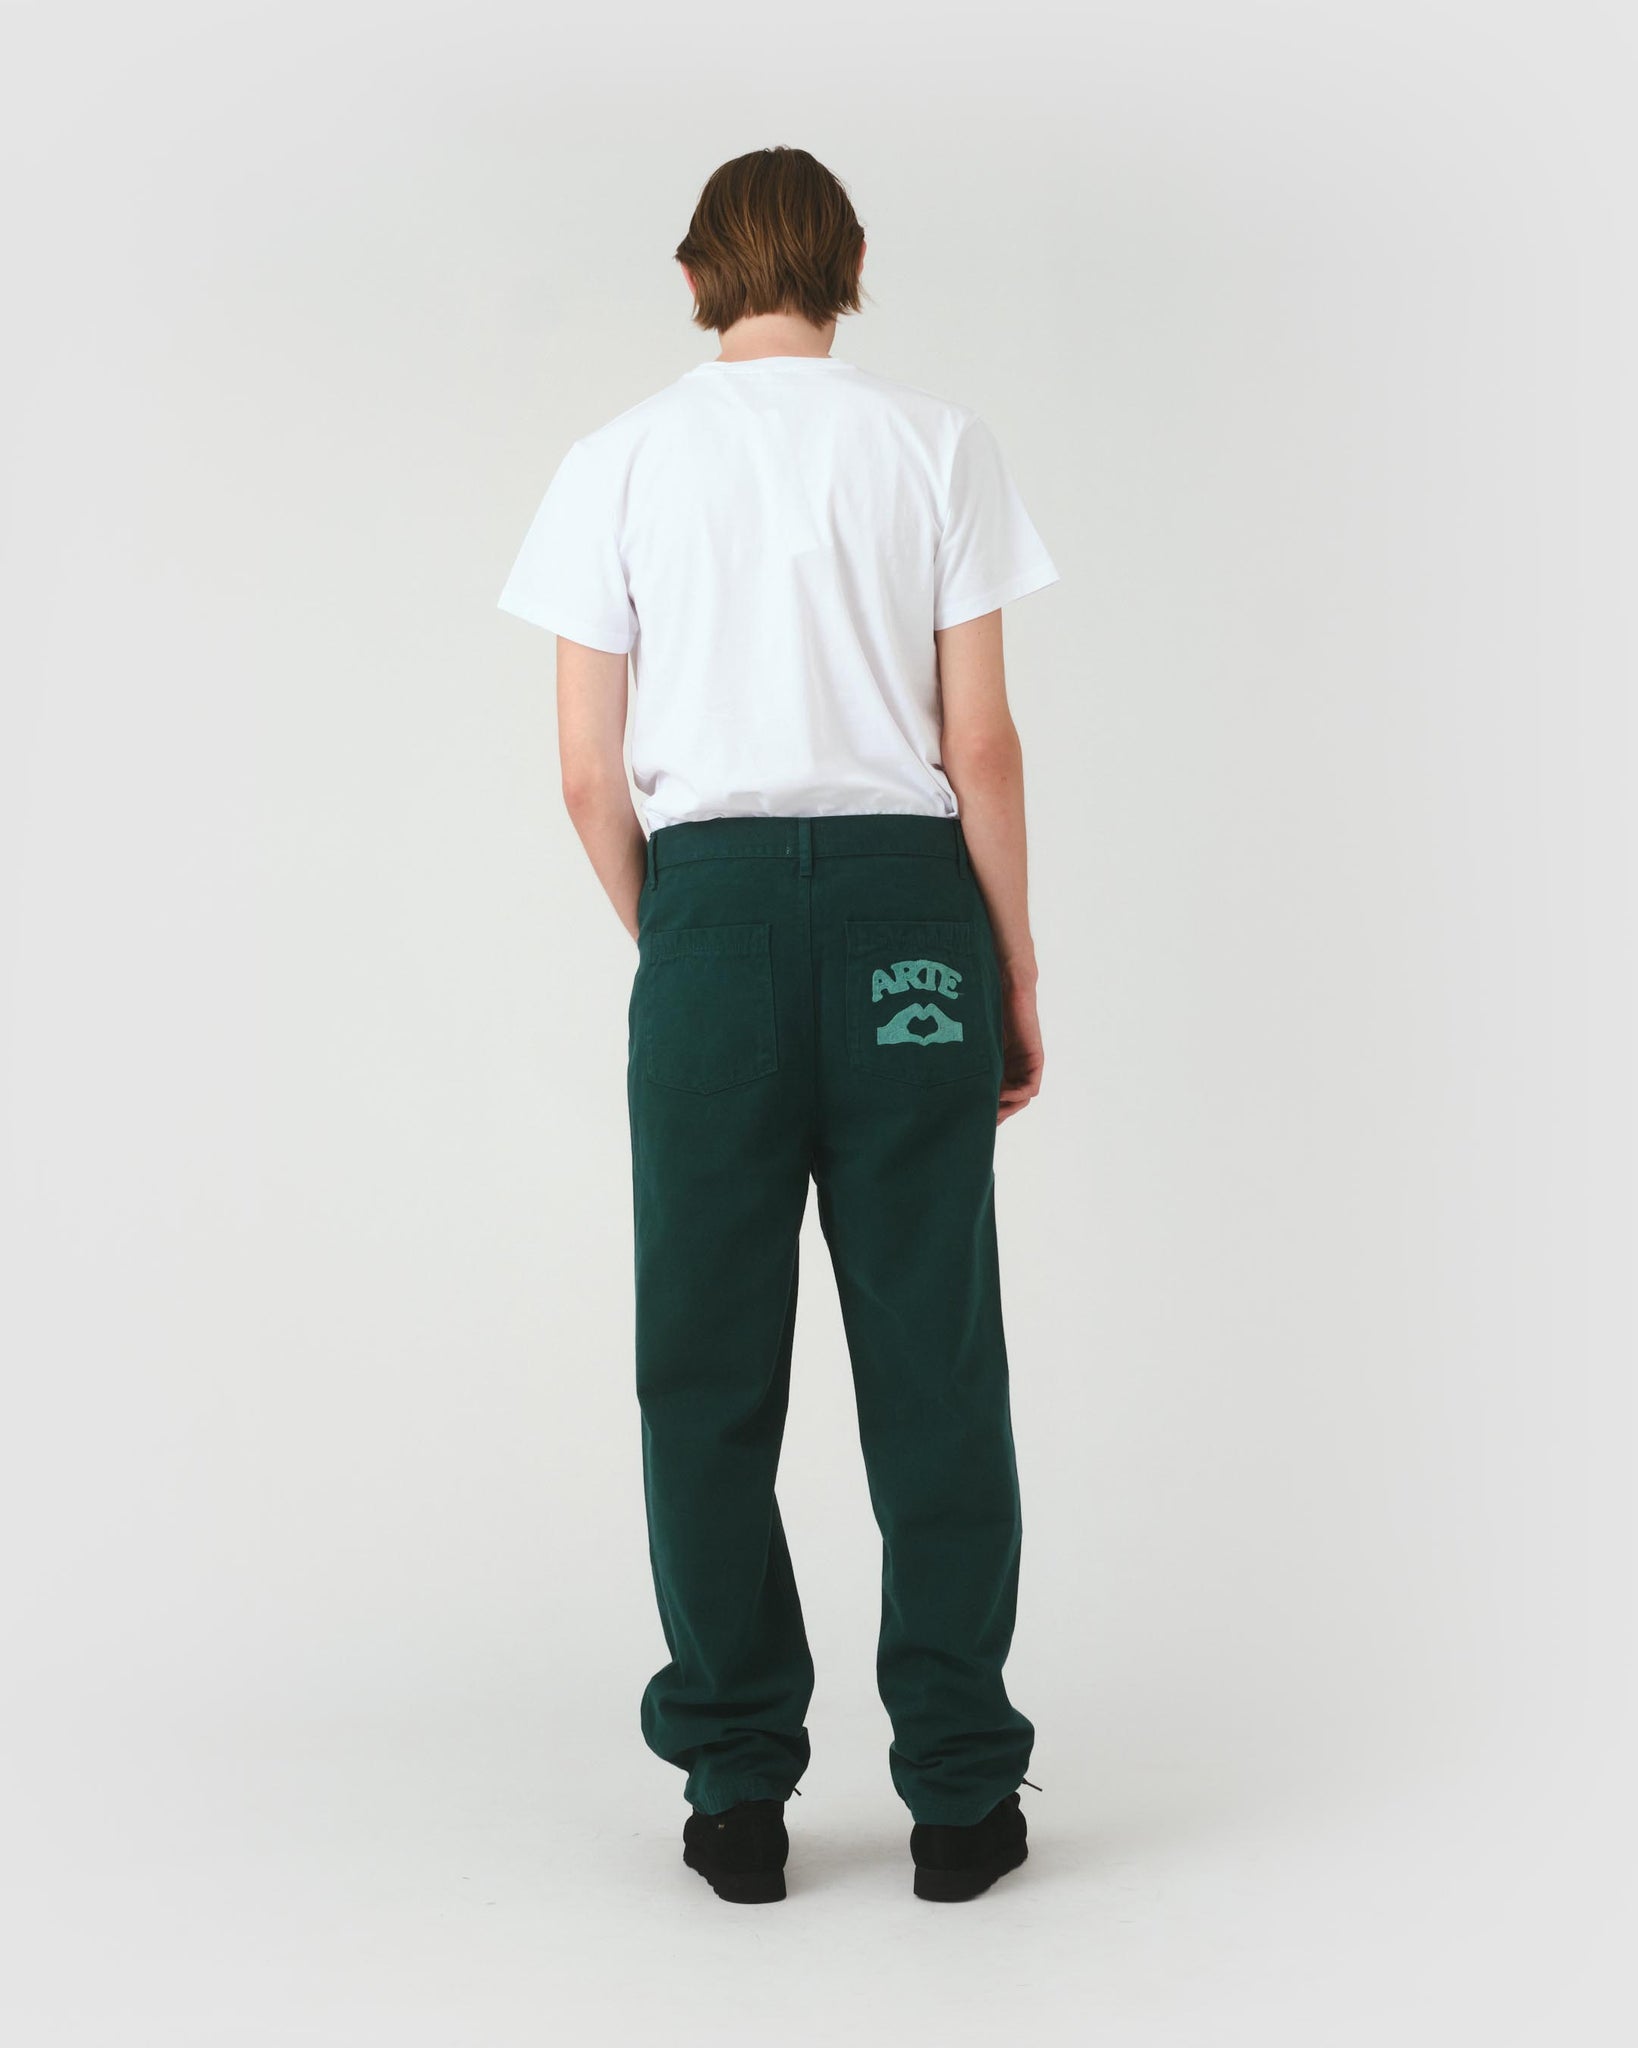 Paul Pocket Logo Pants - Green